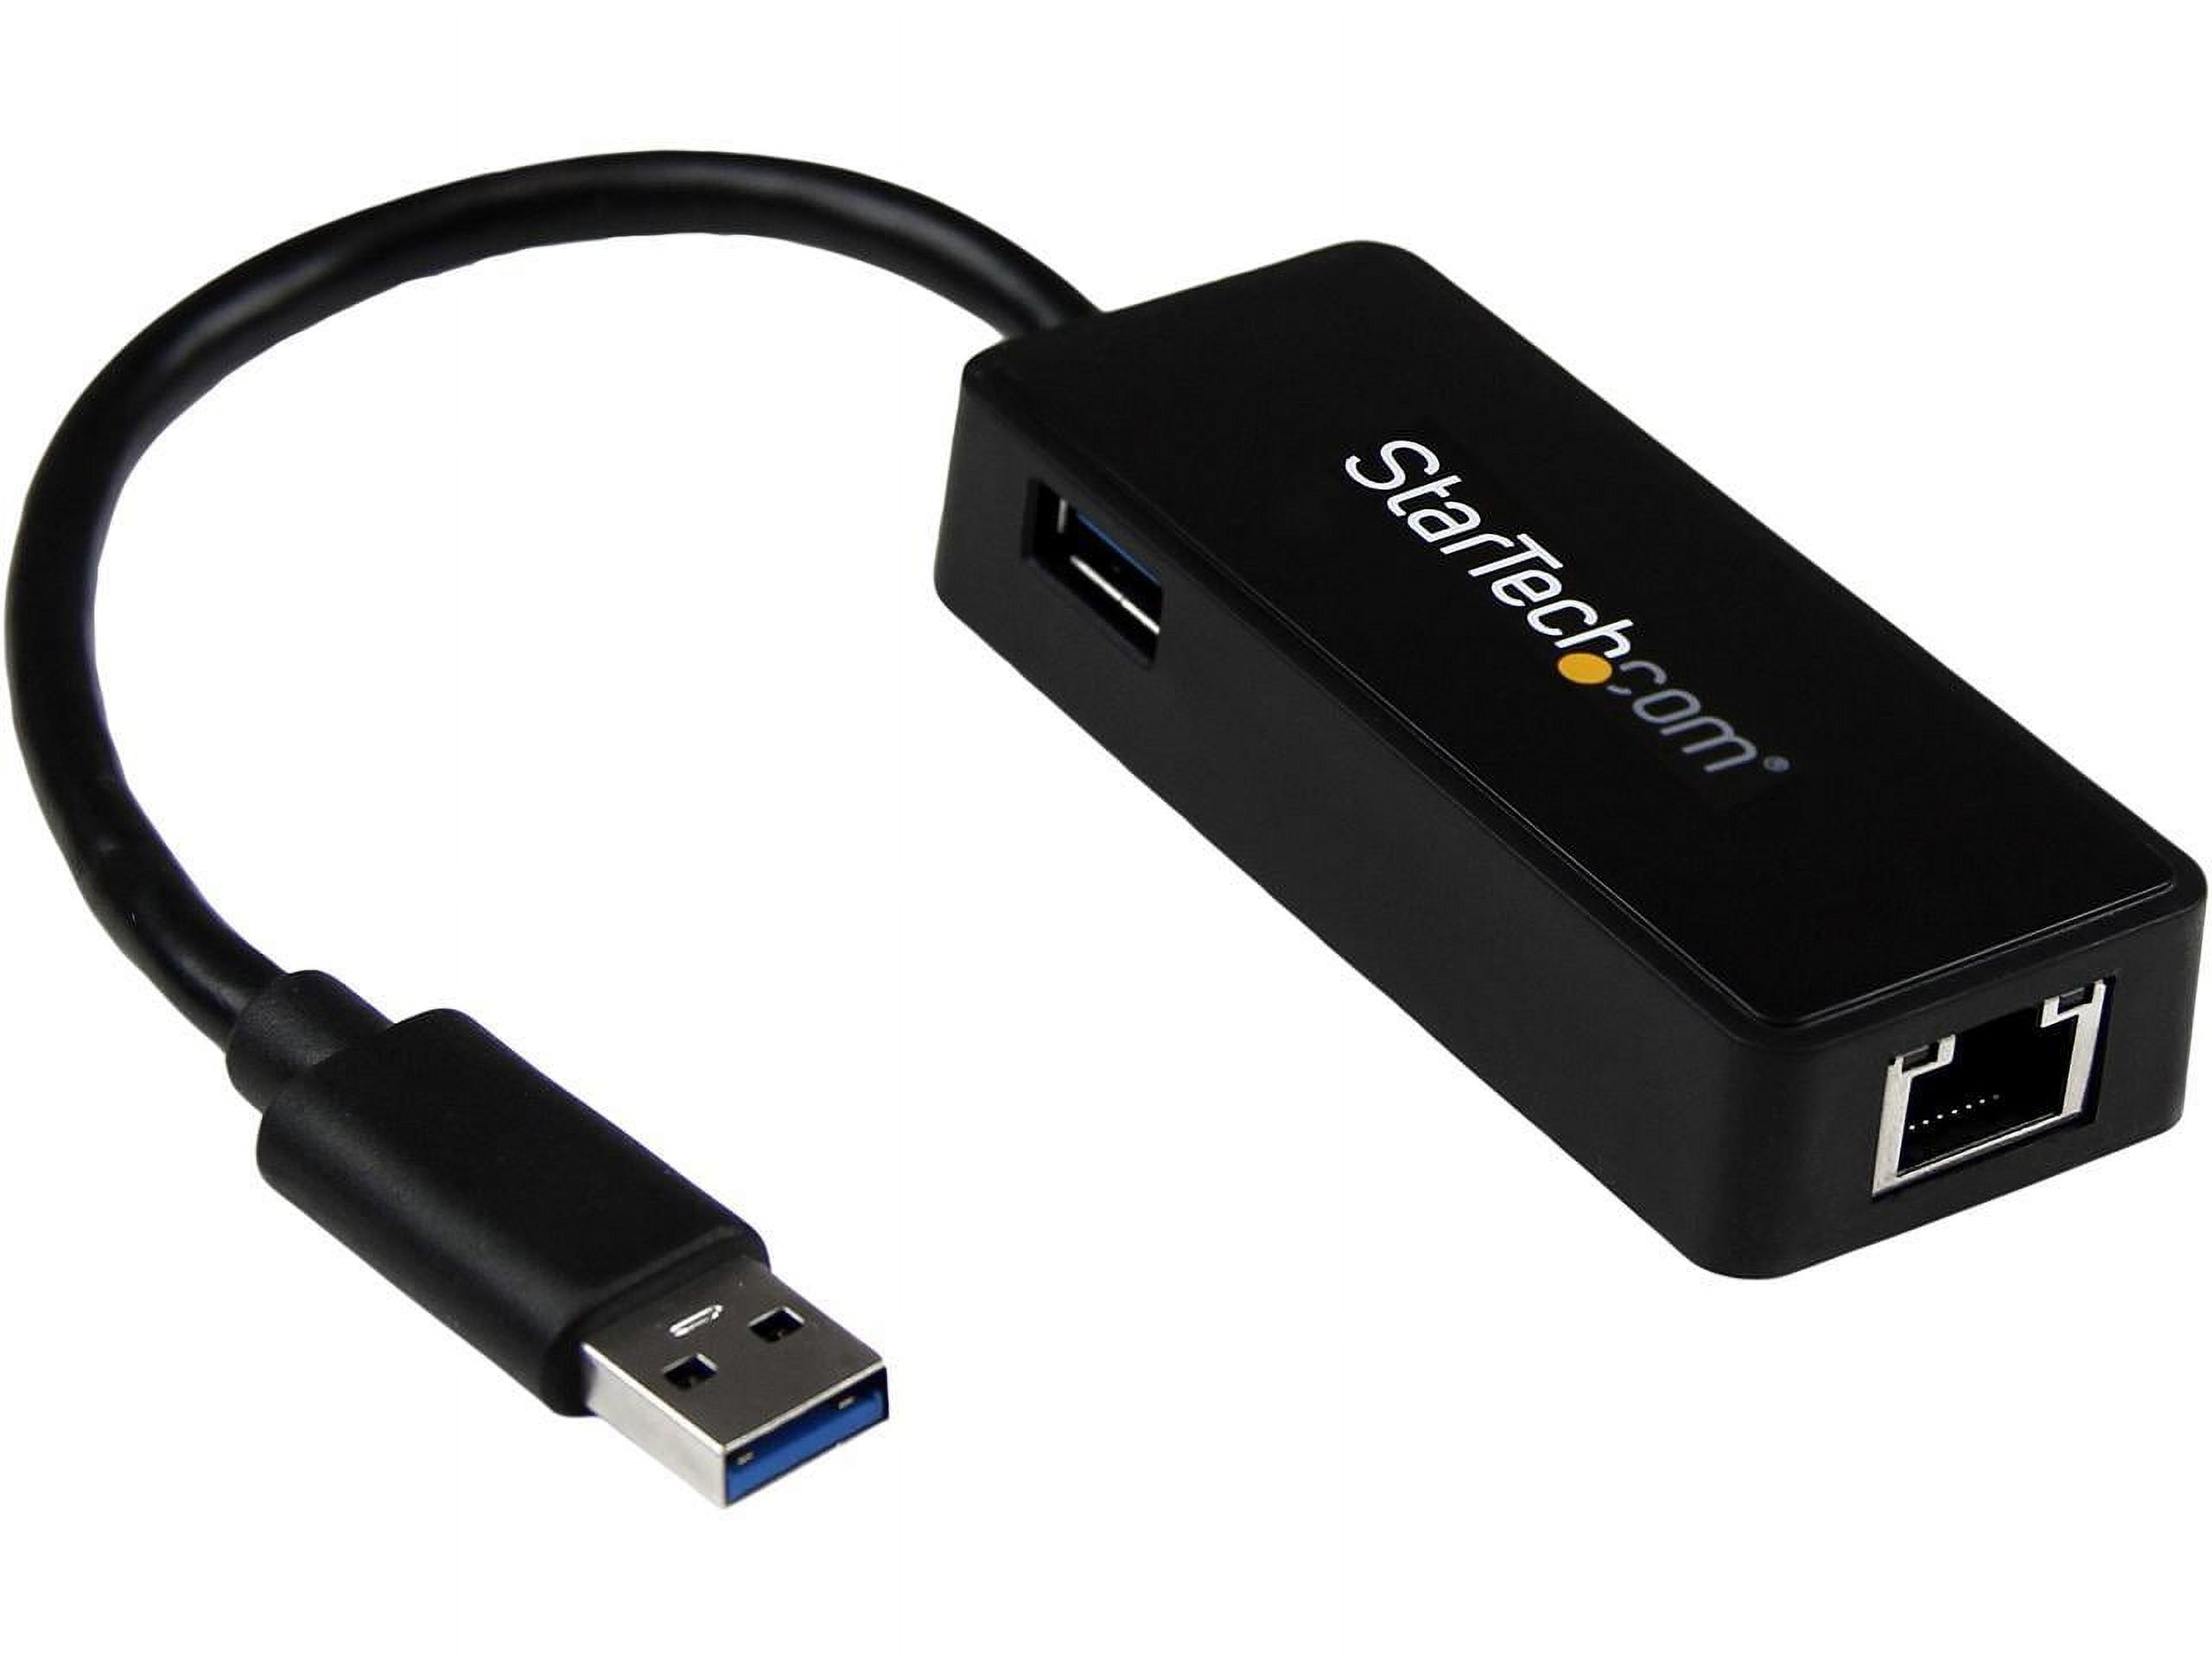 StarTech USB31000SPTB USB 3.0 to Gigabit Ethernet Adapter NIC w/ USB Port - Black - image 1 of 6